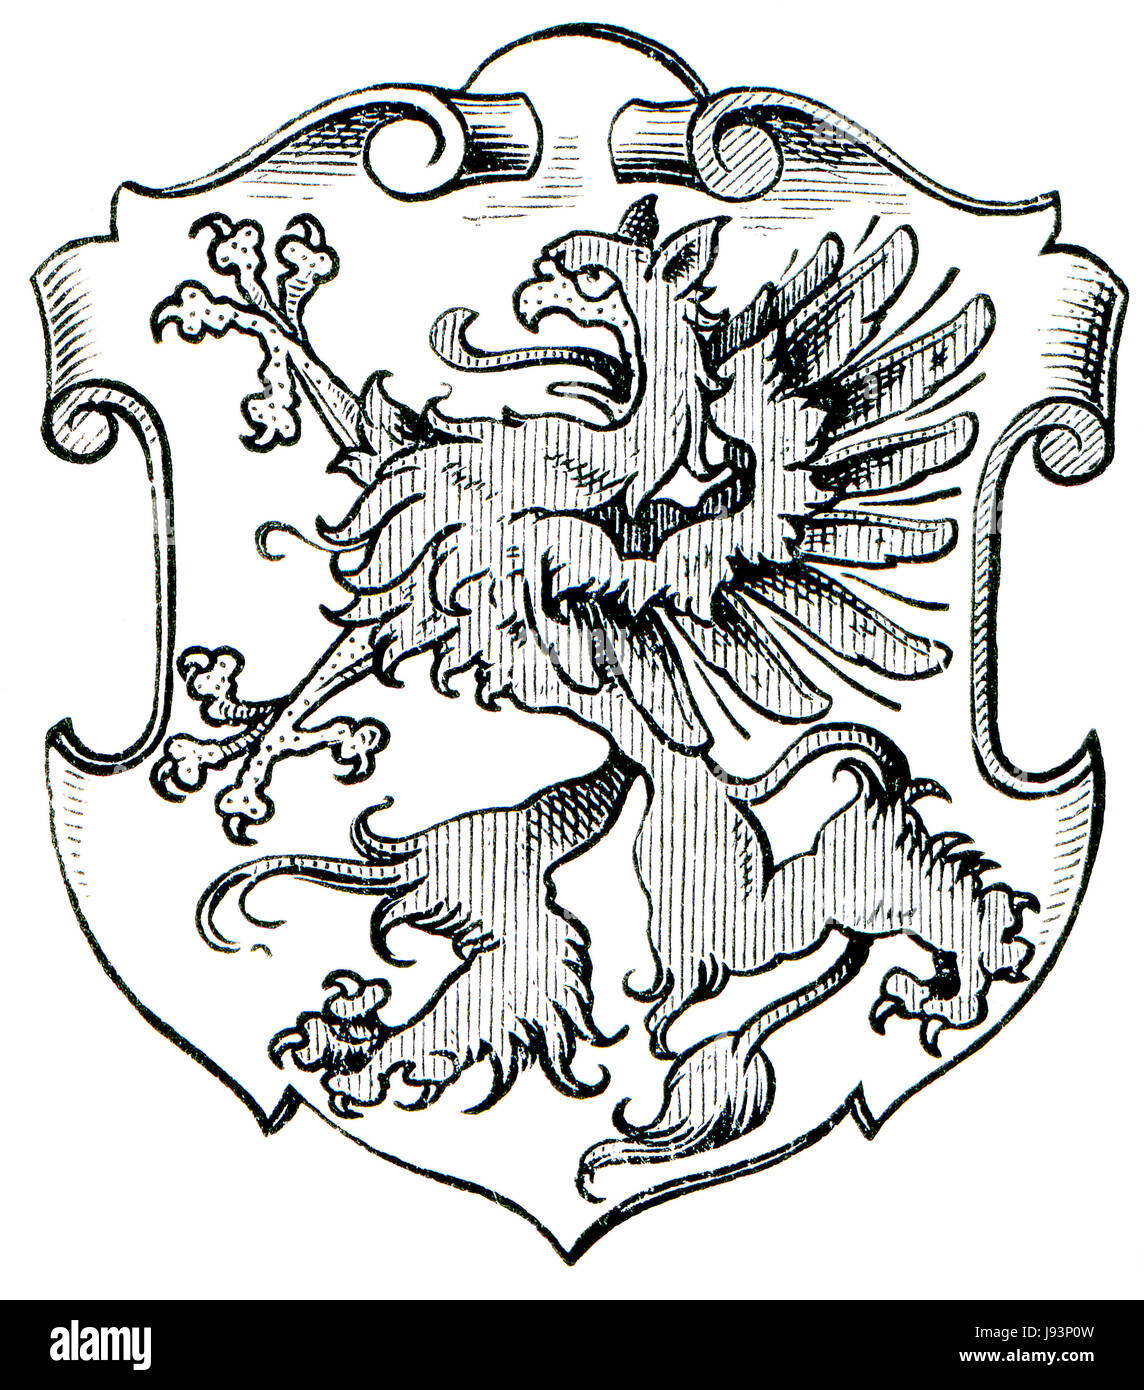 prussia, province, kingdom, engraving, pomerania, historical, antique, black, Stock Photo